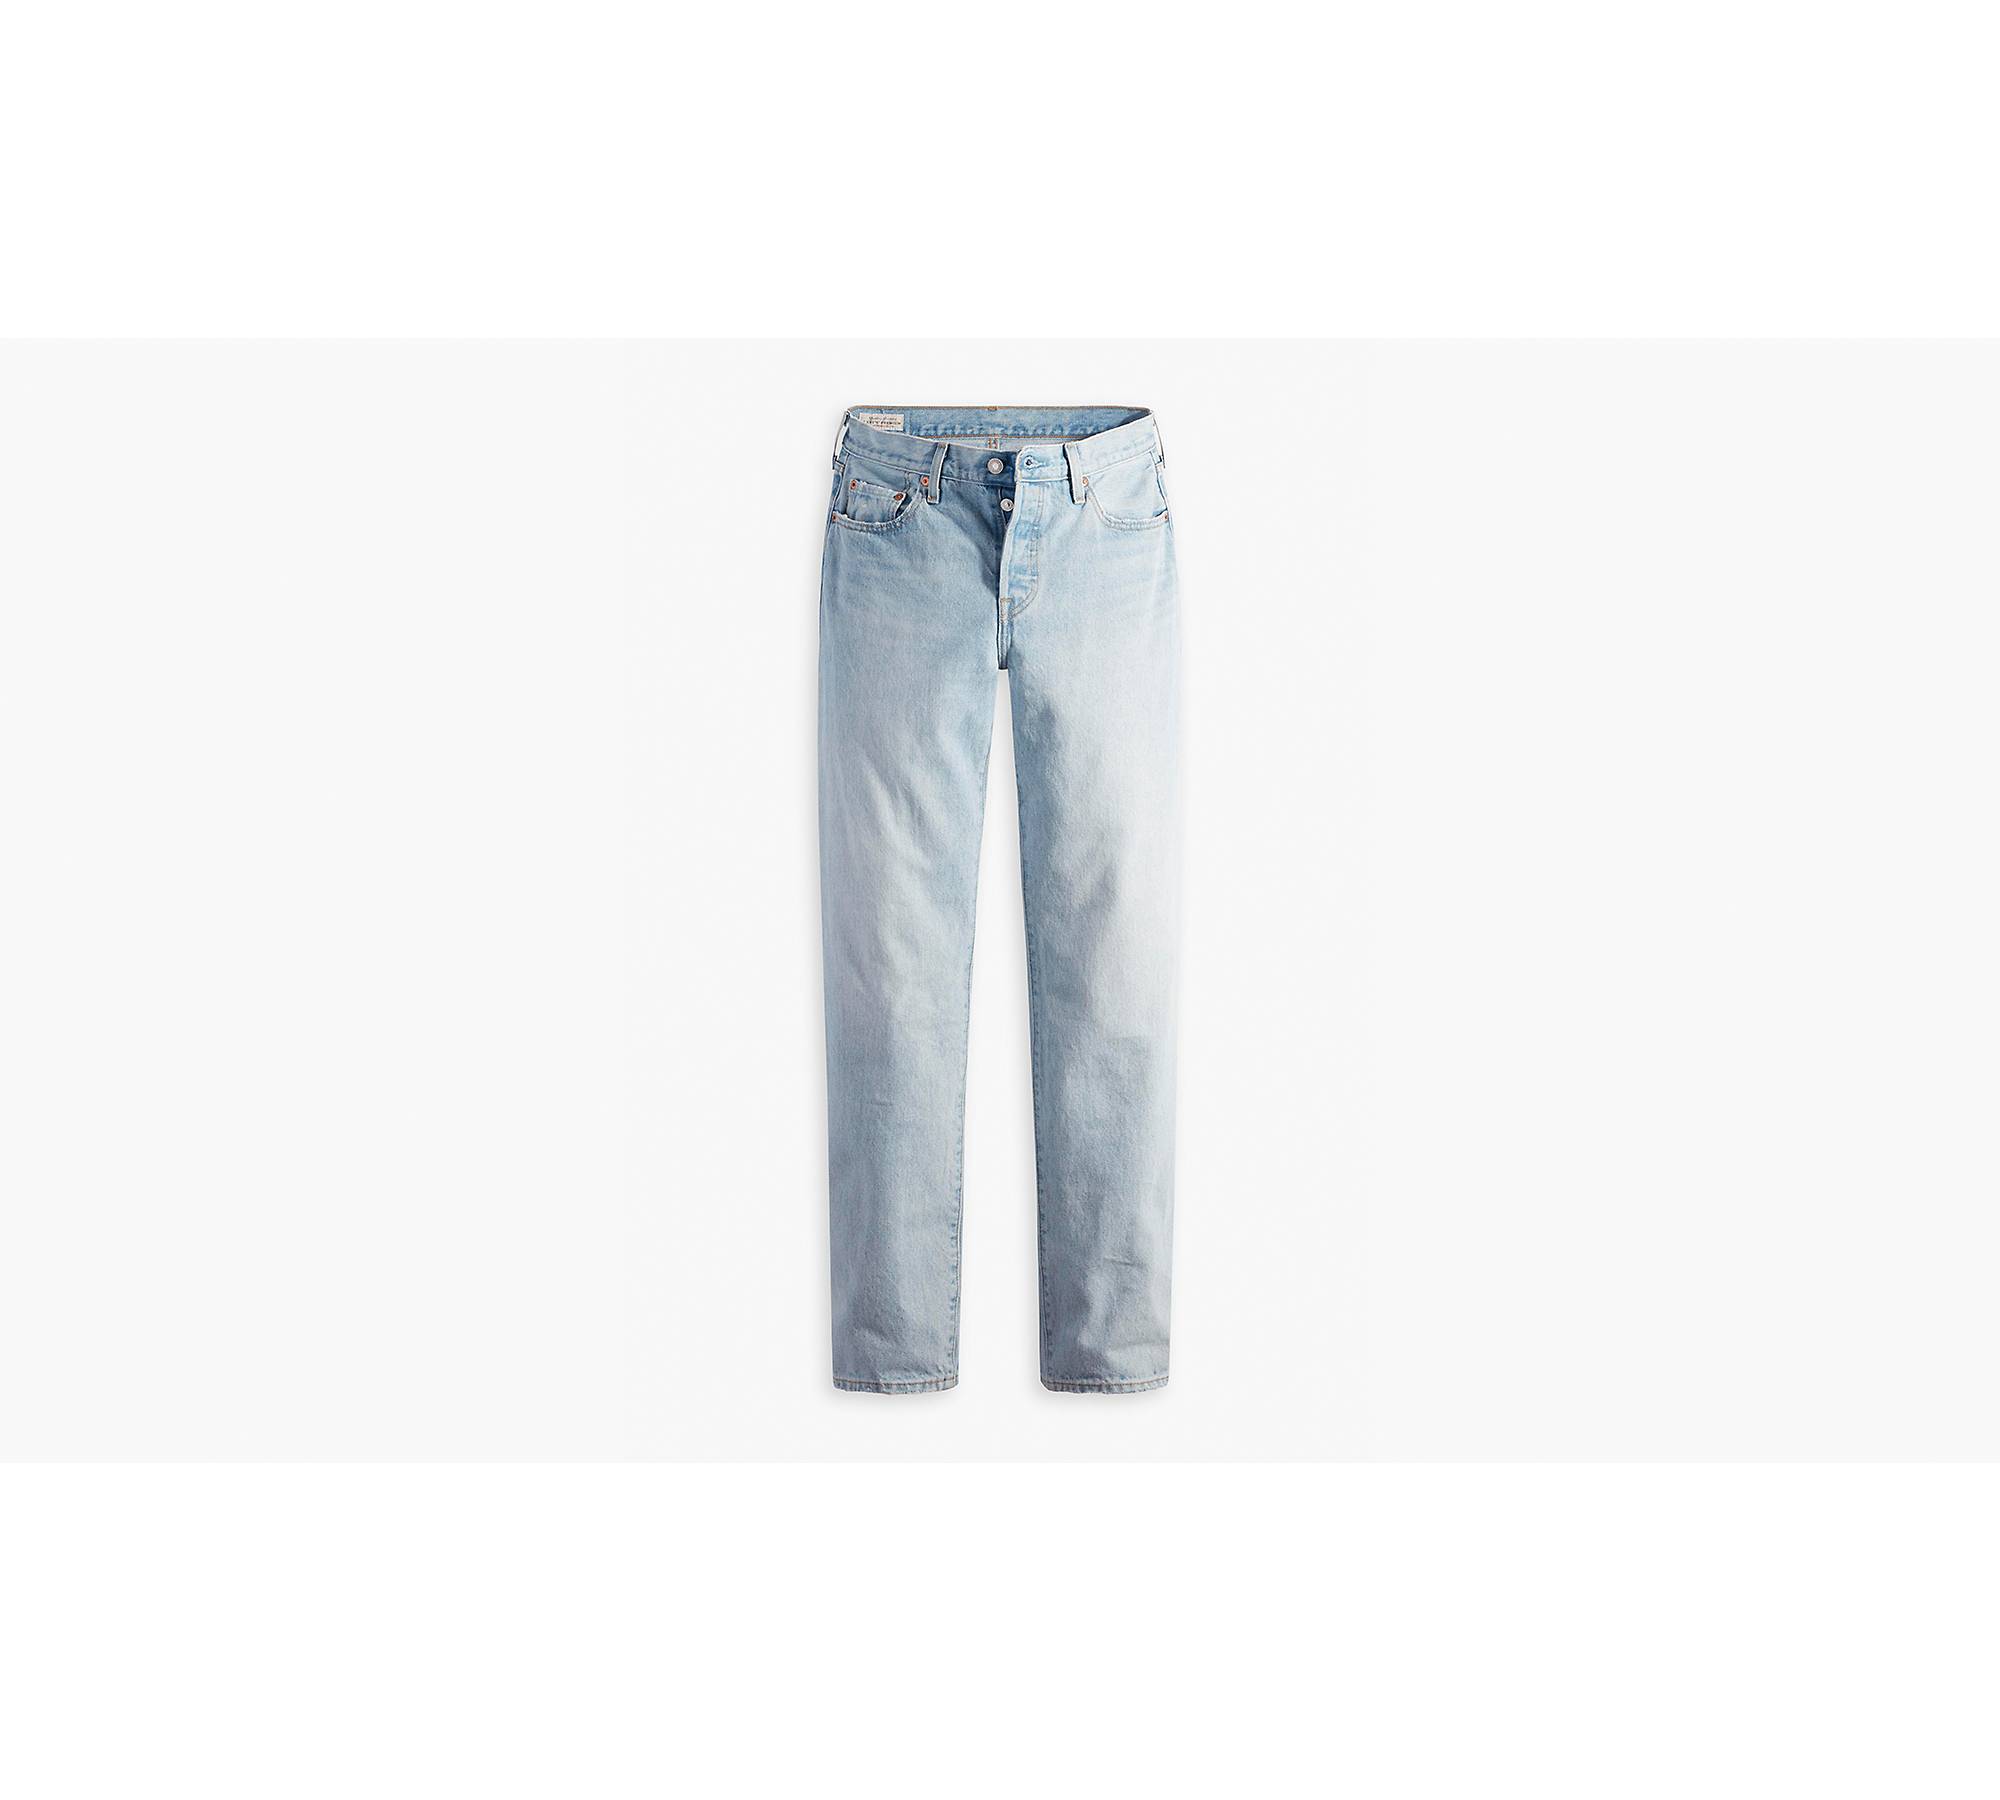 Express Jeans - Denim & Jeans